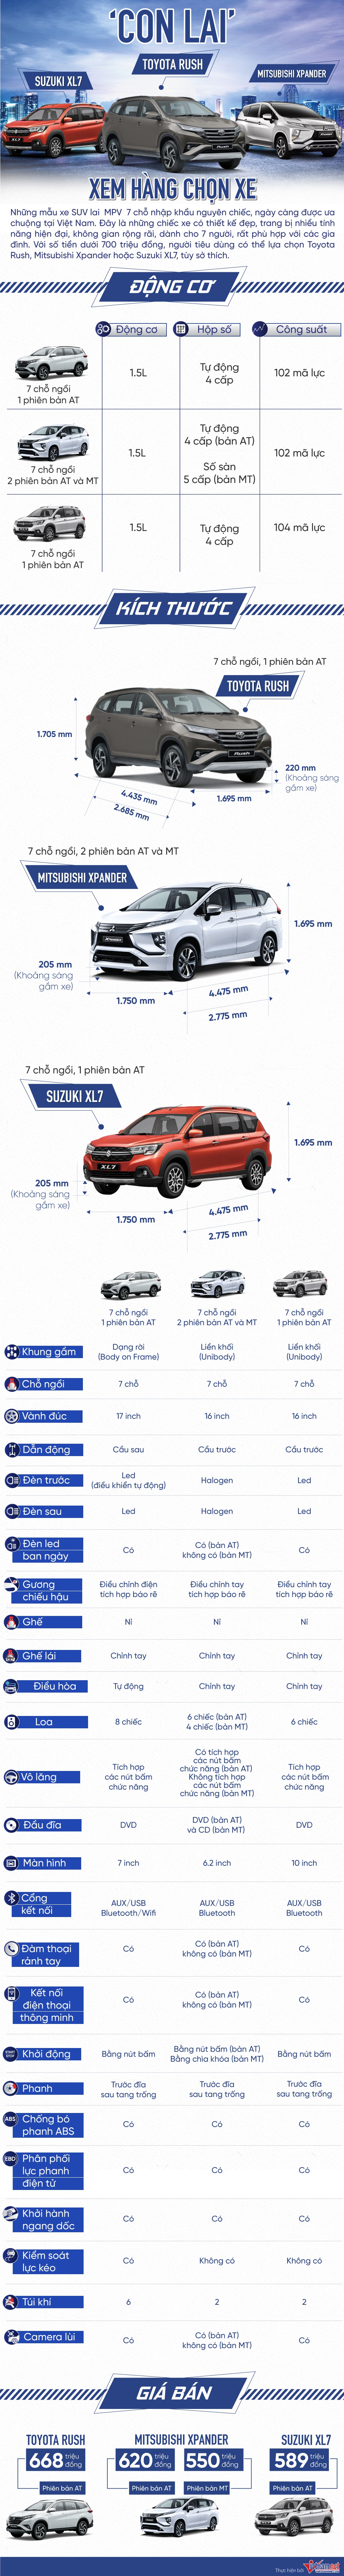 Dưới 700 triệu: Chọn Suzuki XL7, Toyota Rush hay Mitsubishi Xpander?